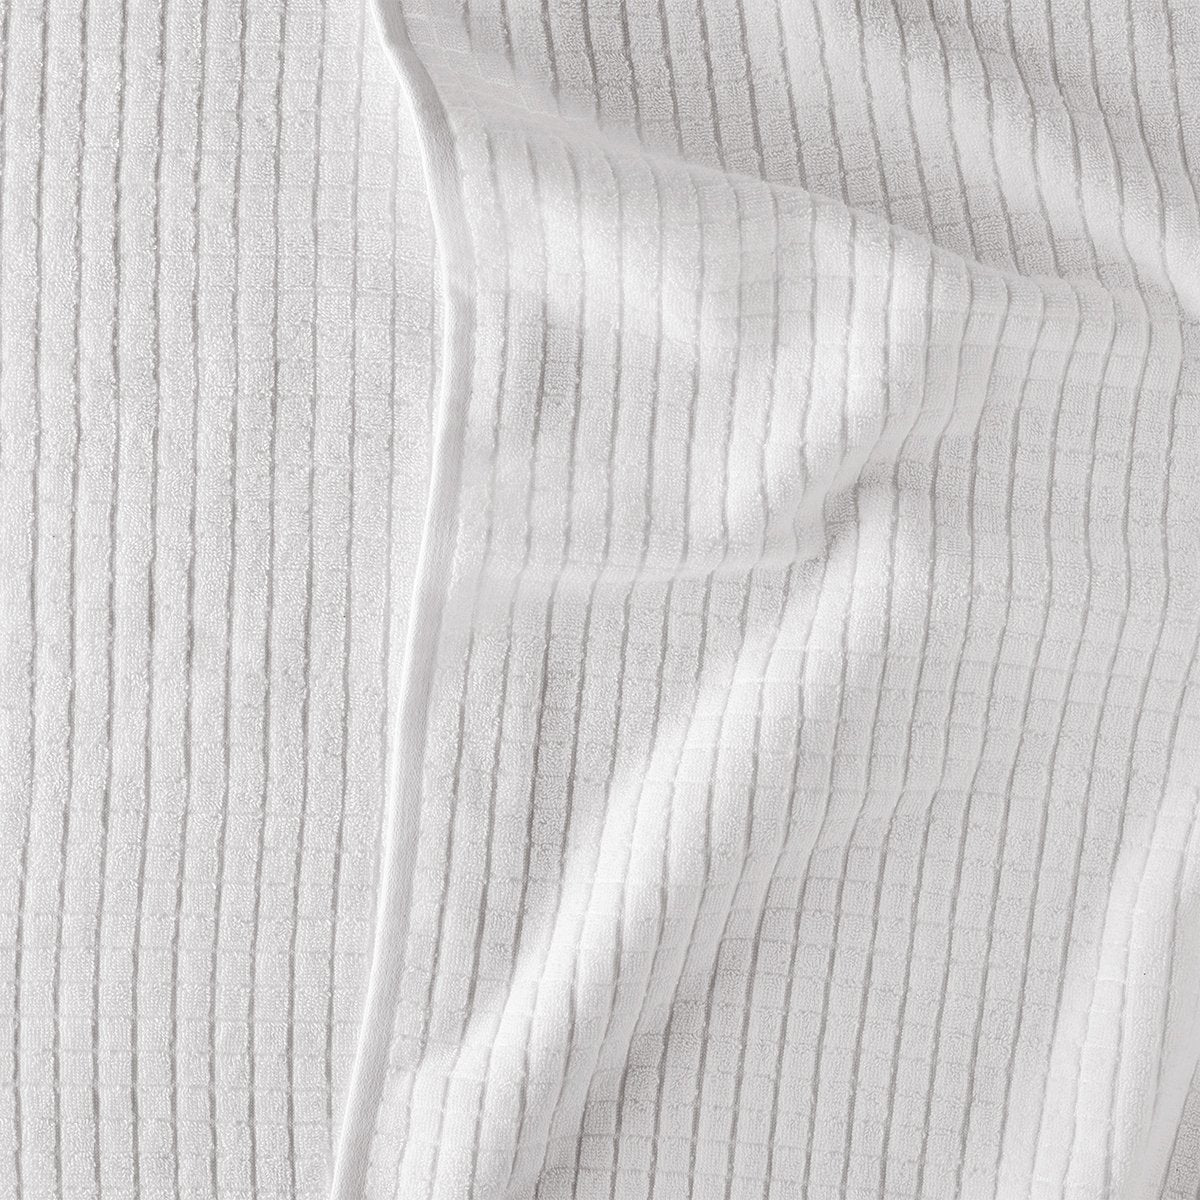 Hemp , Tencel & Organic Cotton Light Weight Crinkle Fabric